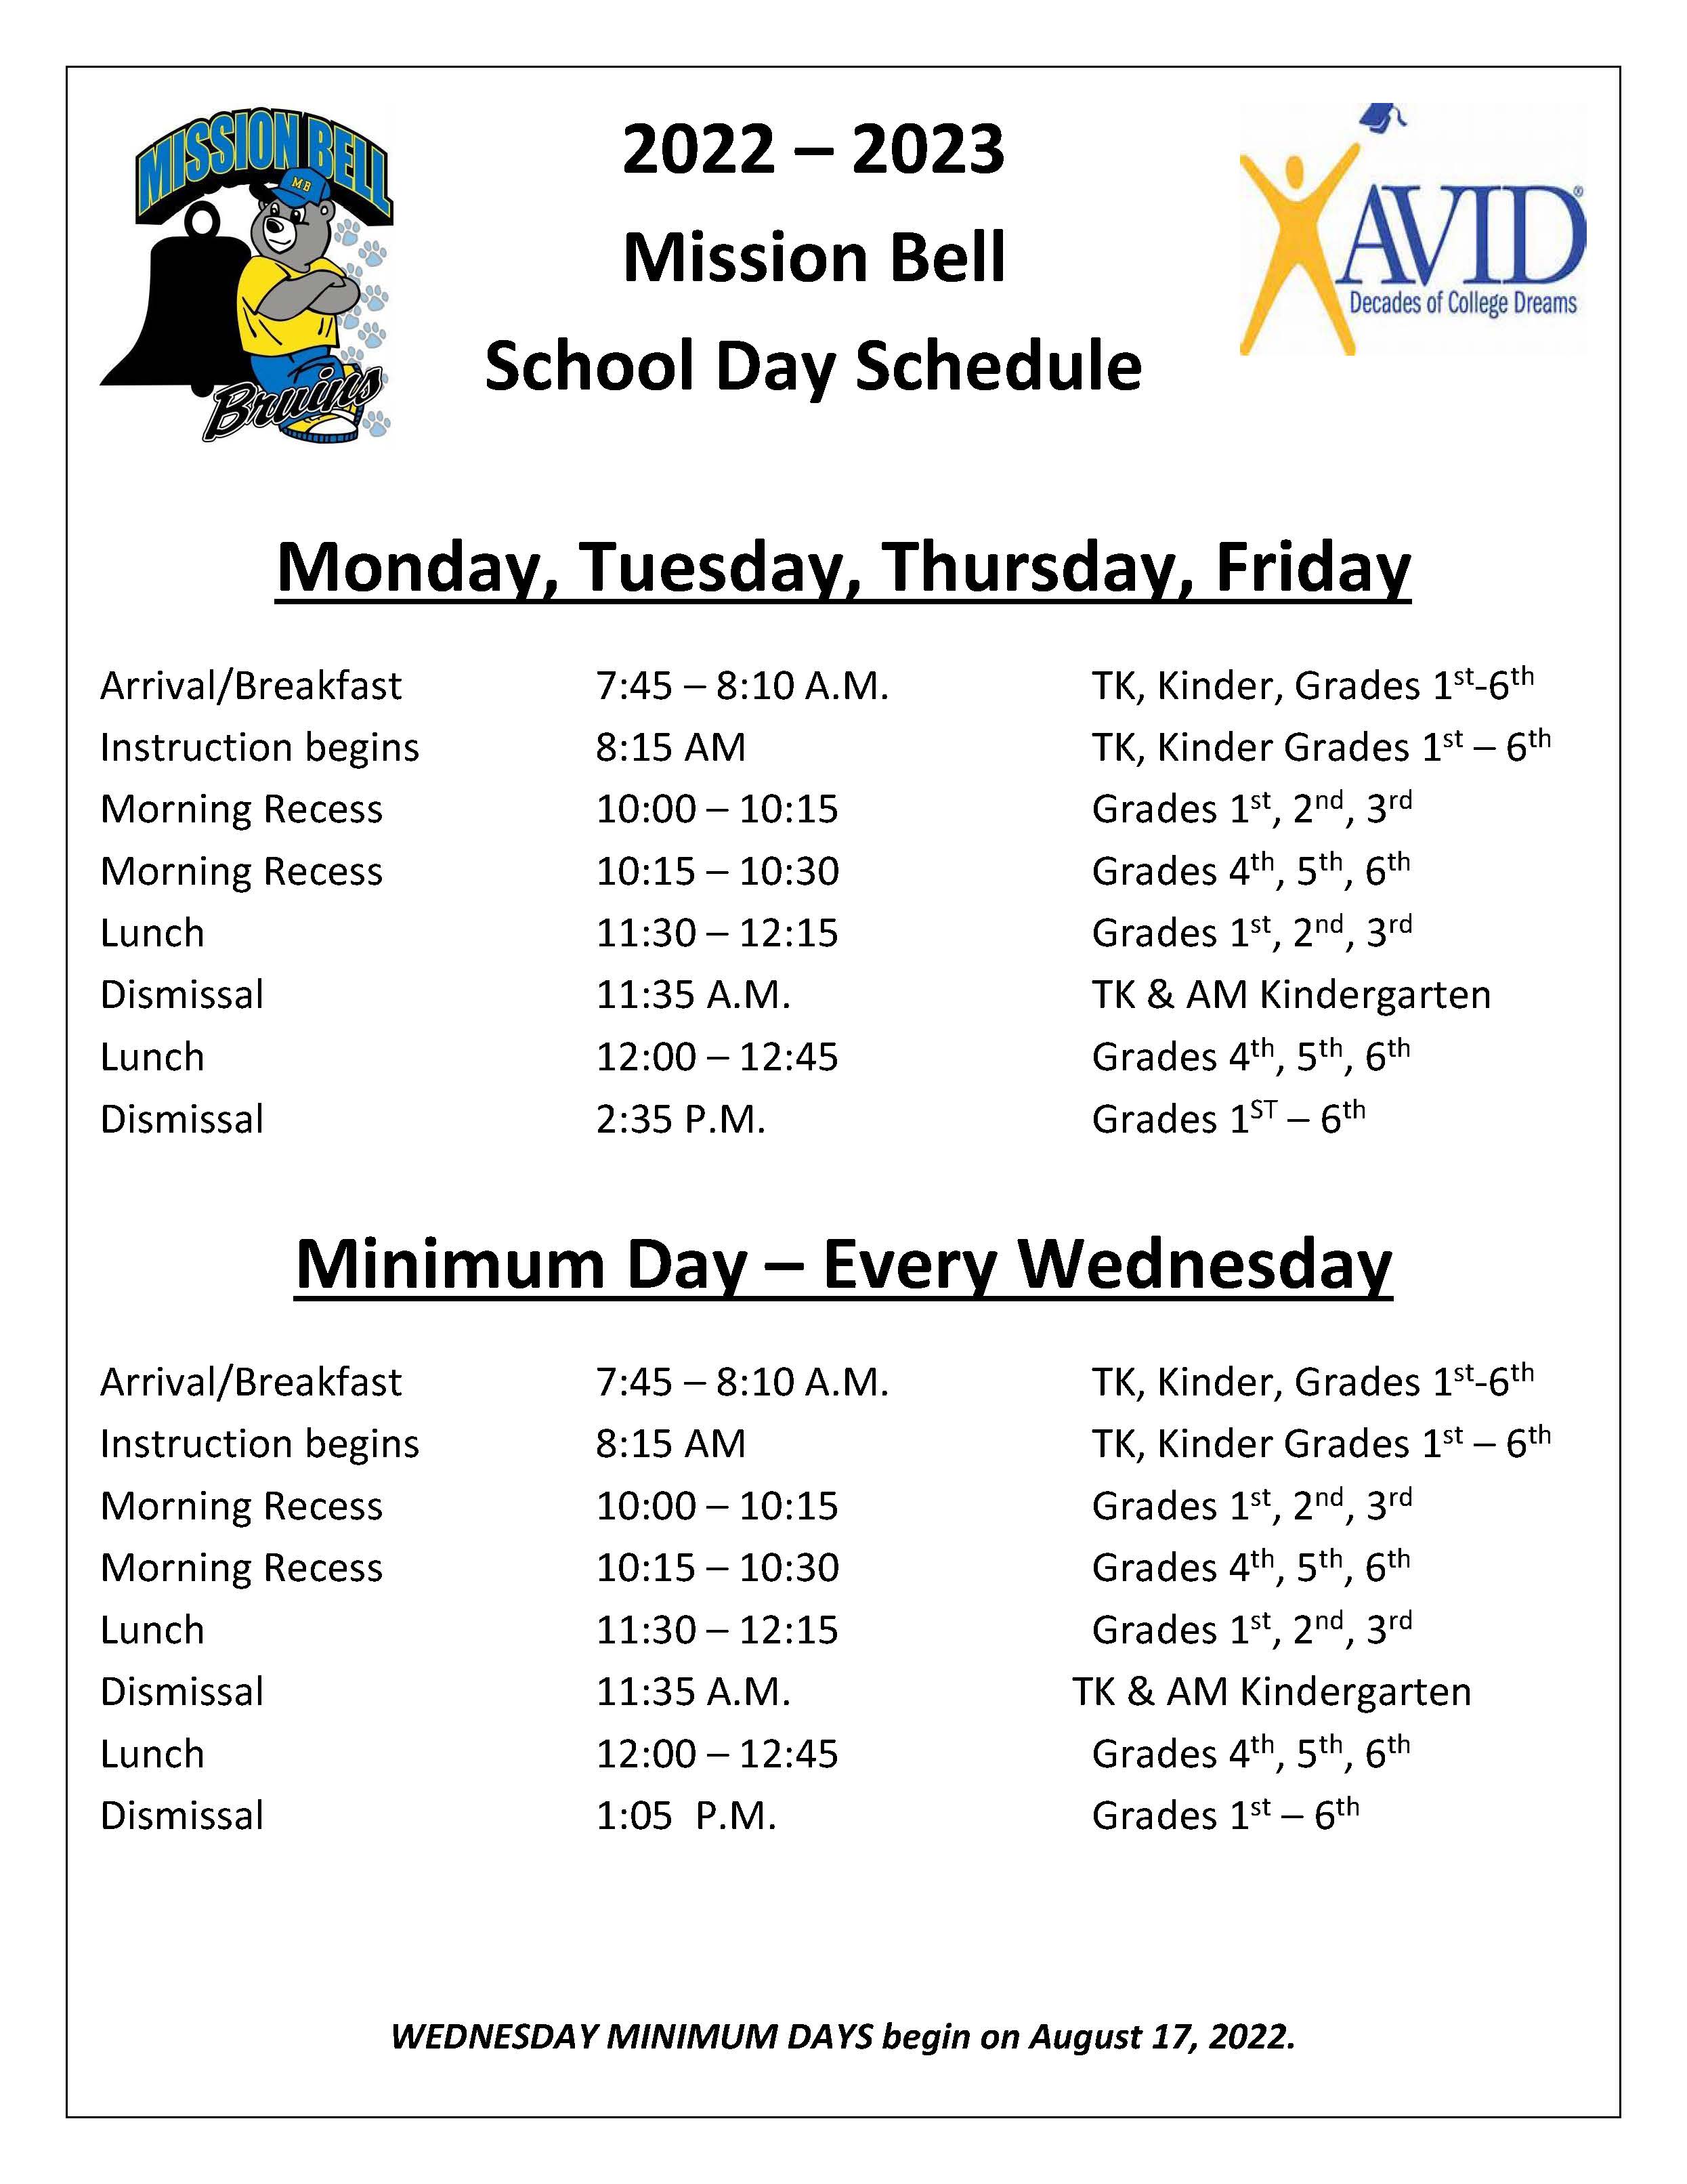 School_Day_Schedule.jpg